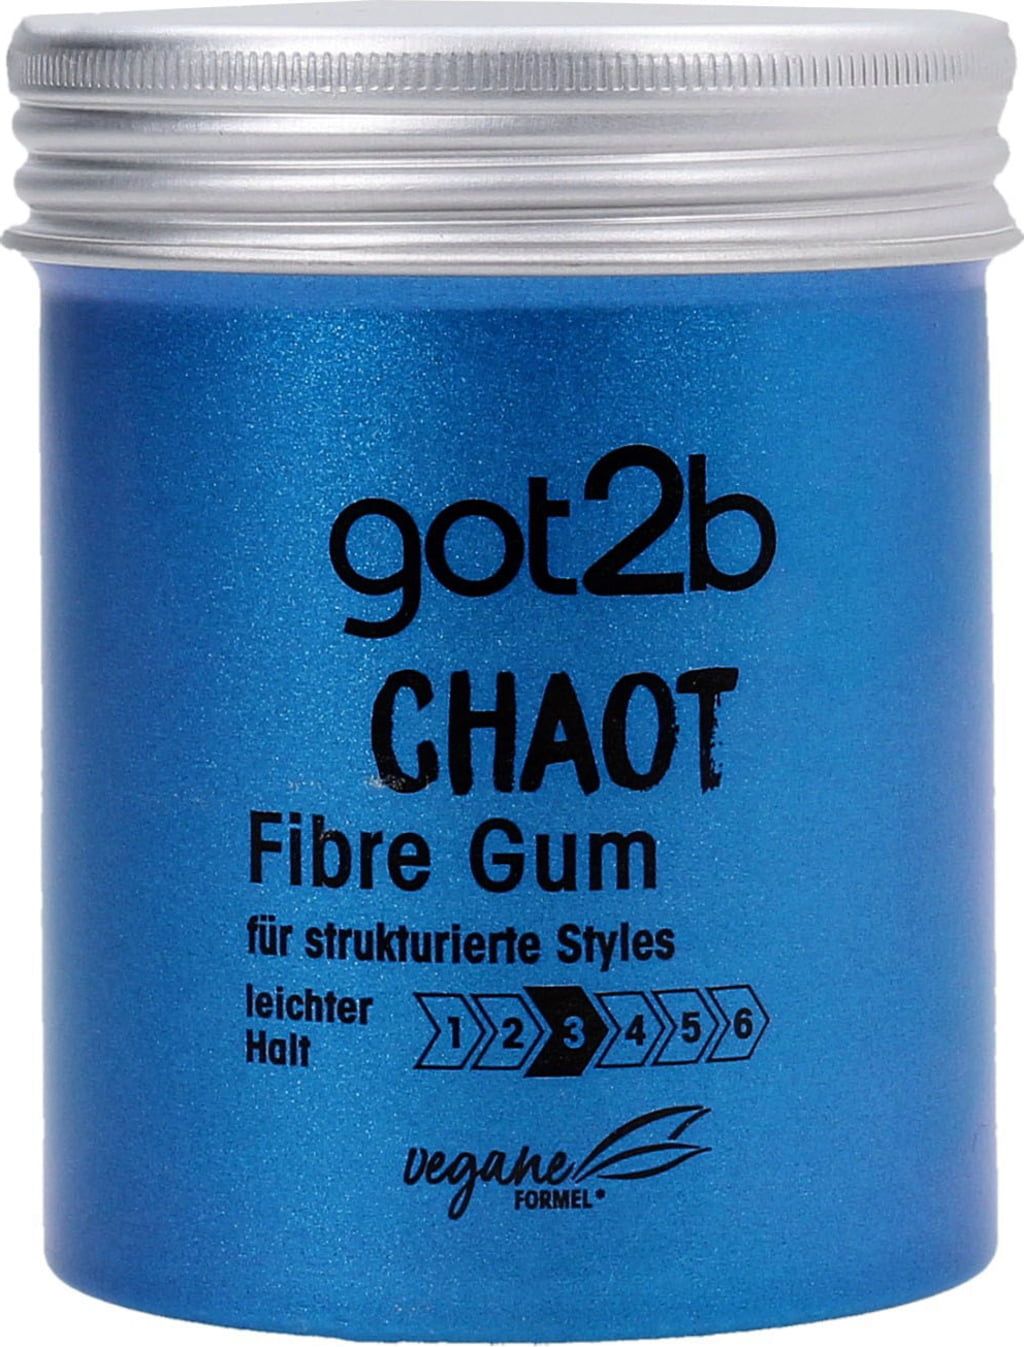 Schwarzkopf got2b - Fibre Gum Chaotic, 100 ml - oh feliz